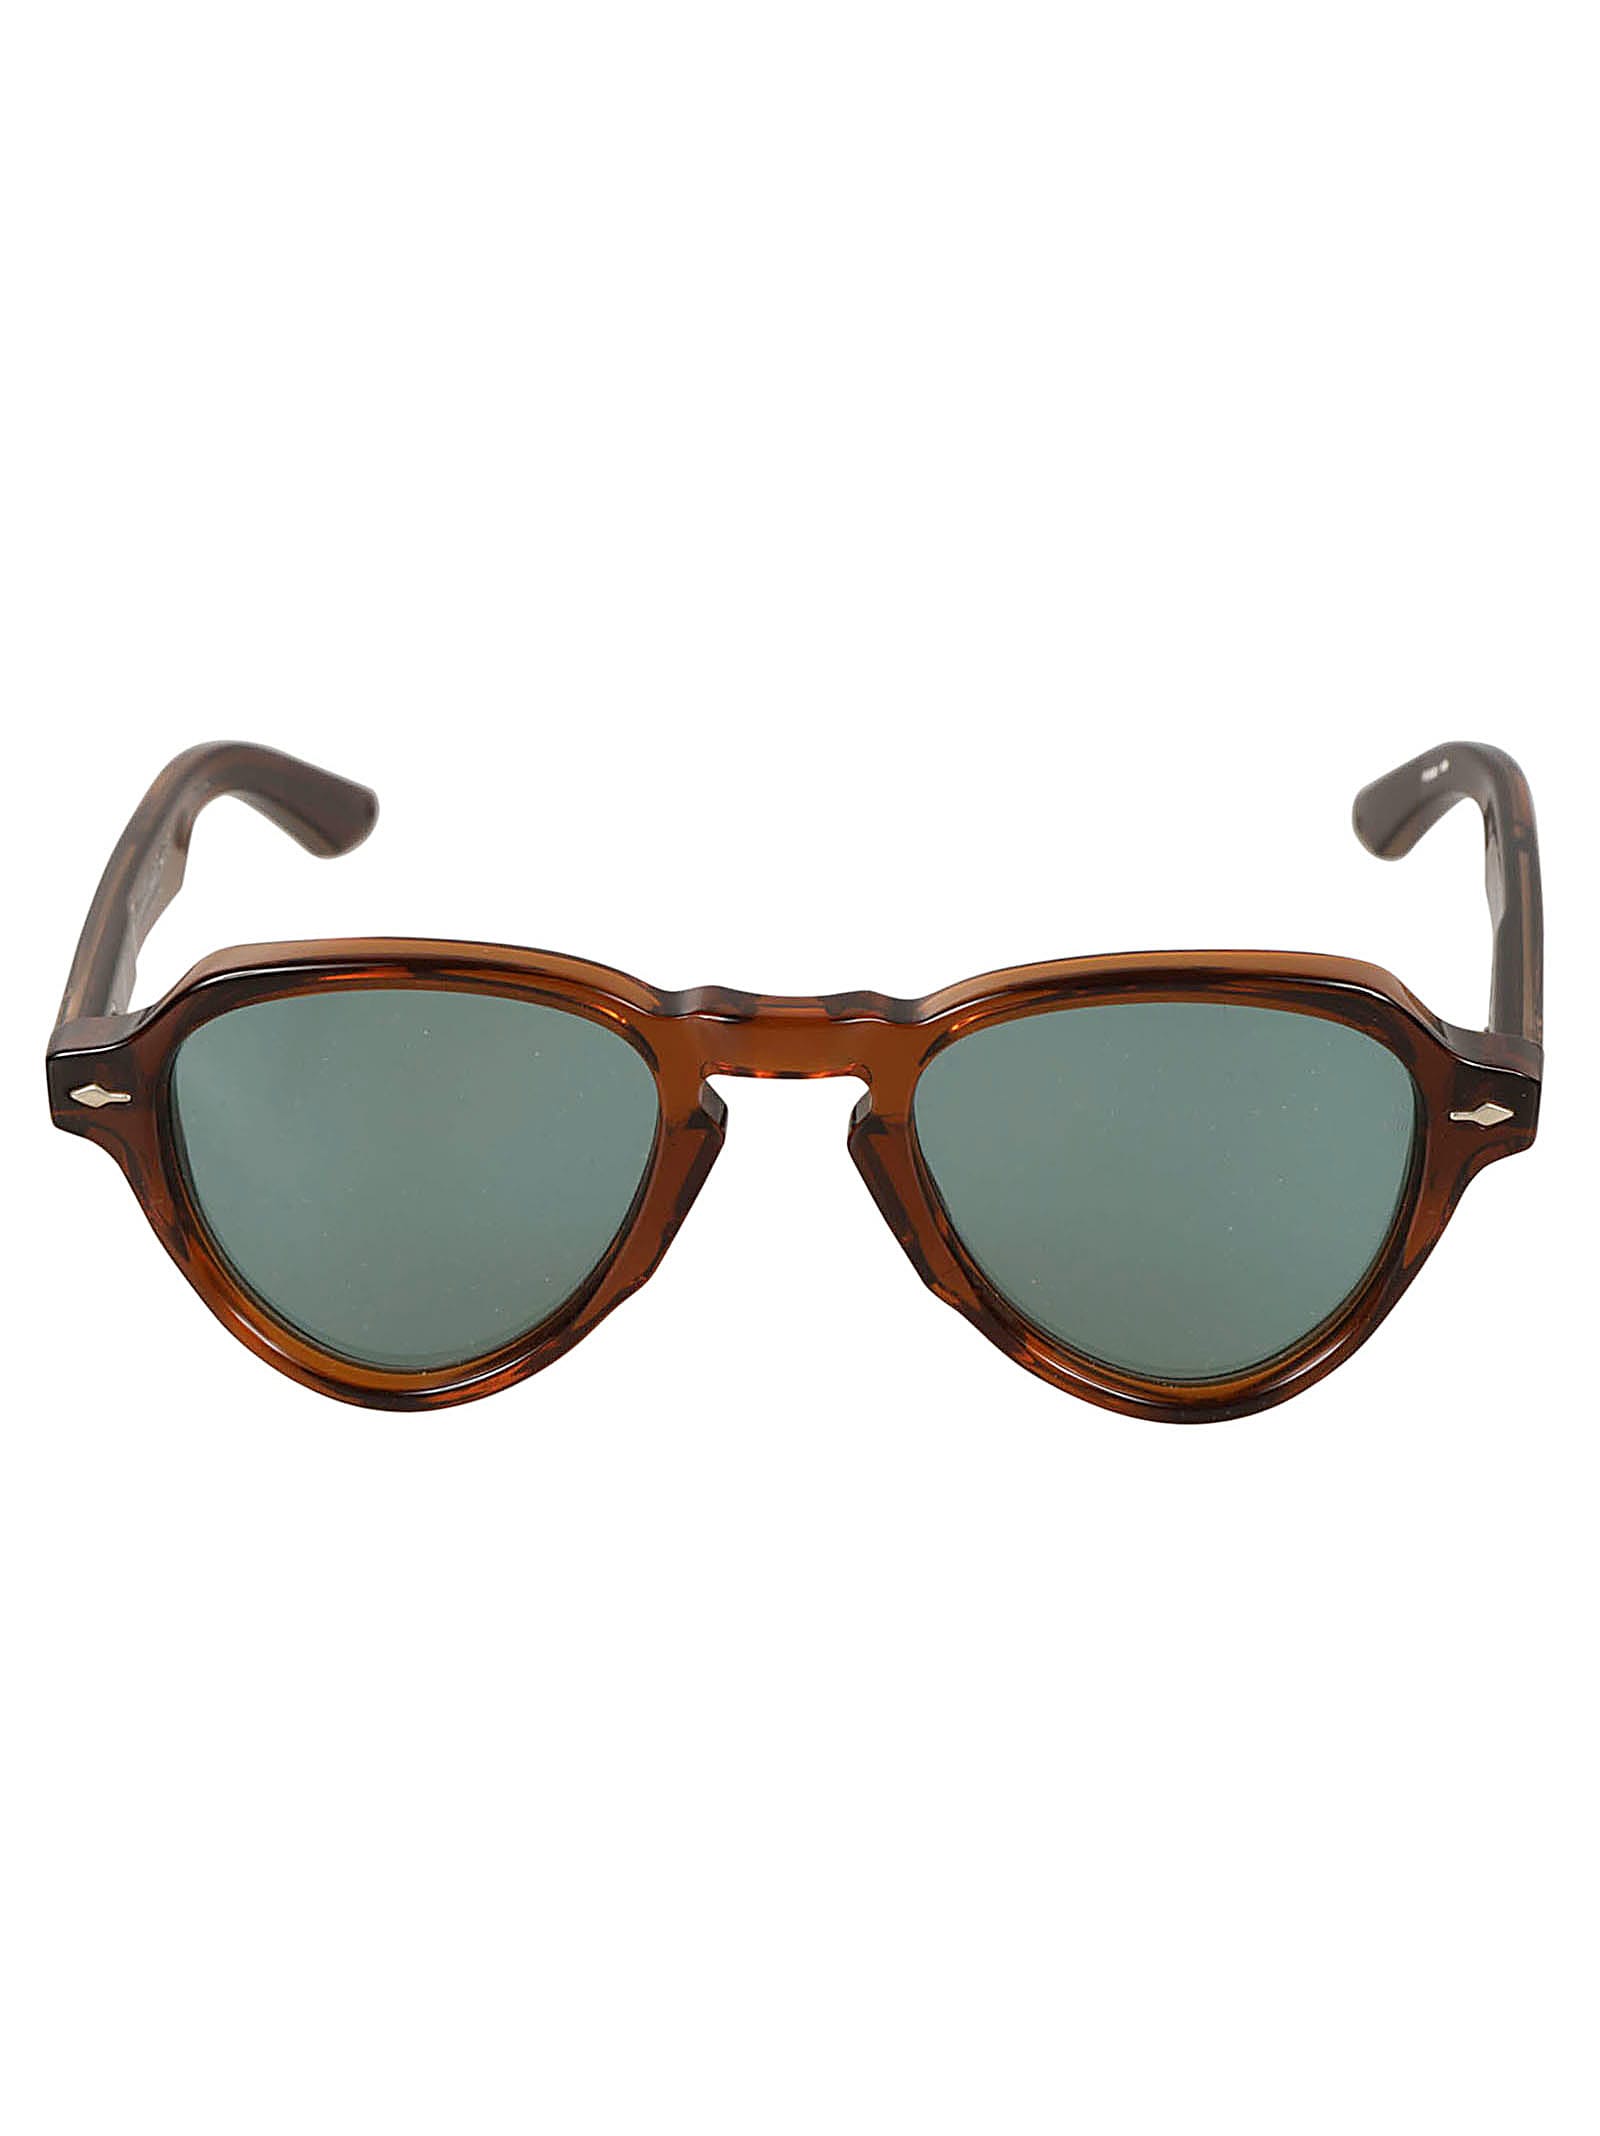 Jacques Marie Mage Hickory Sunglasses Sunglasses In Marrone-oro